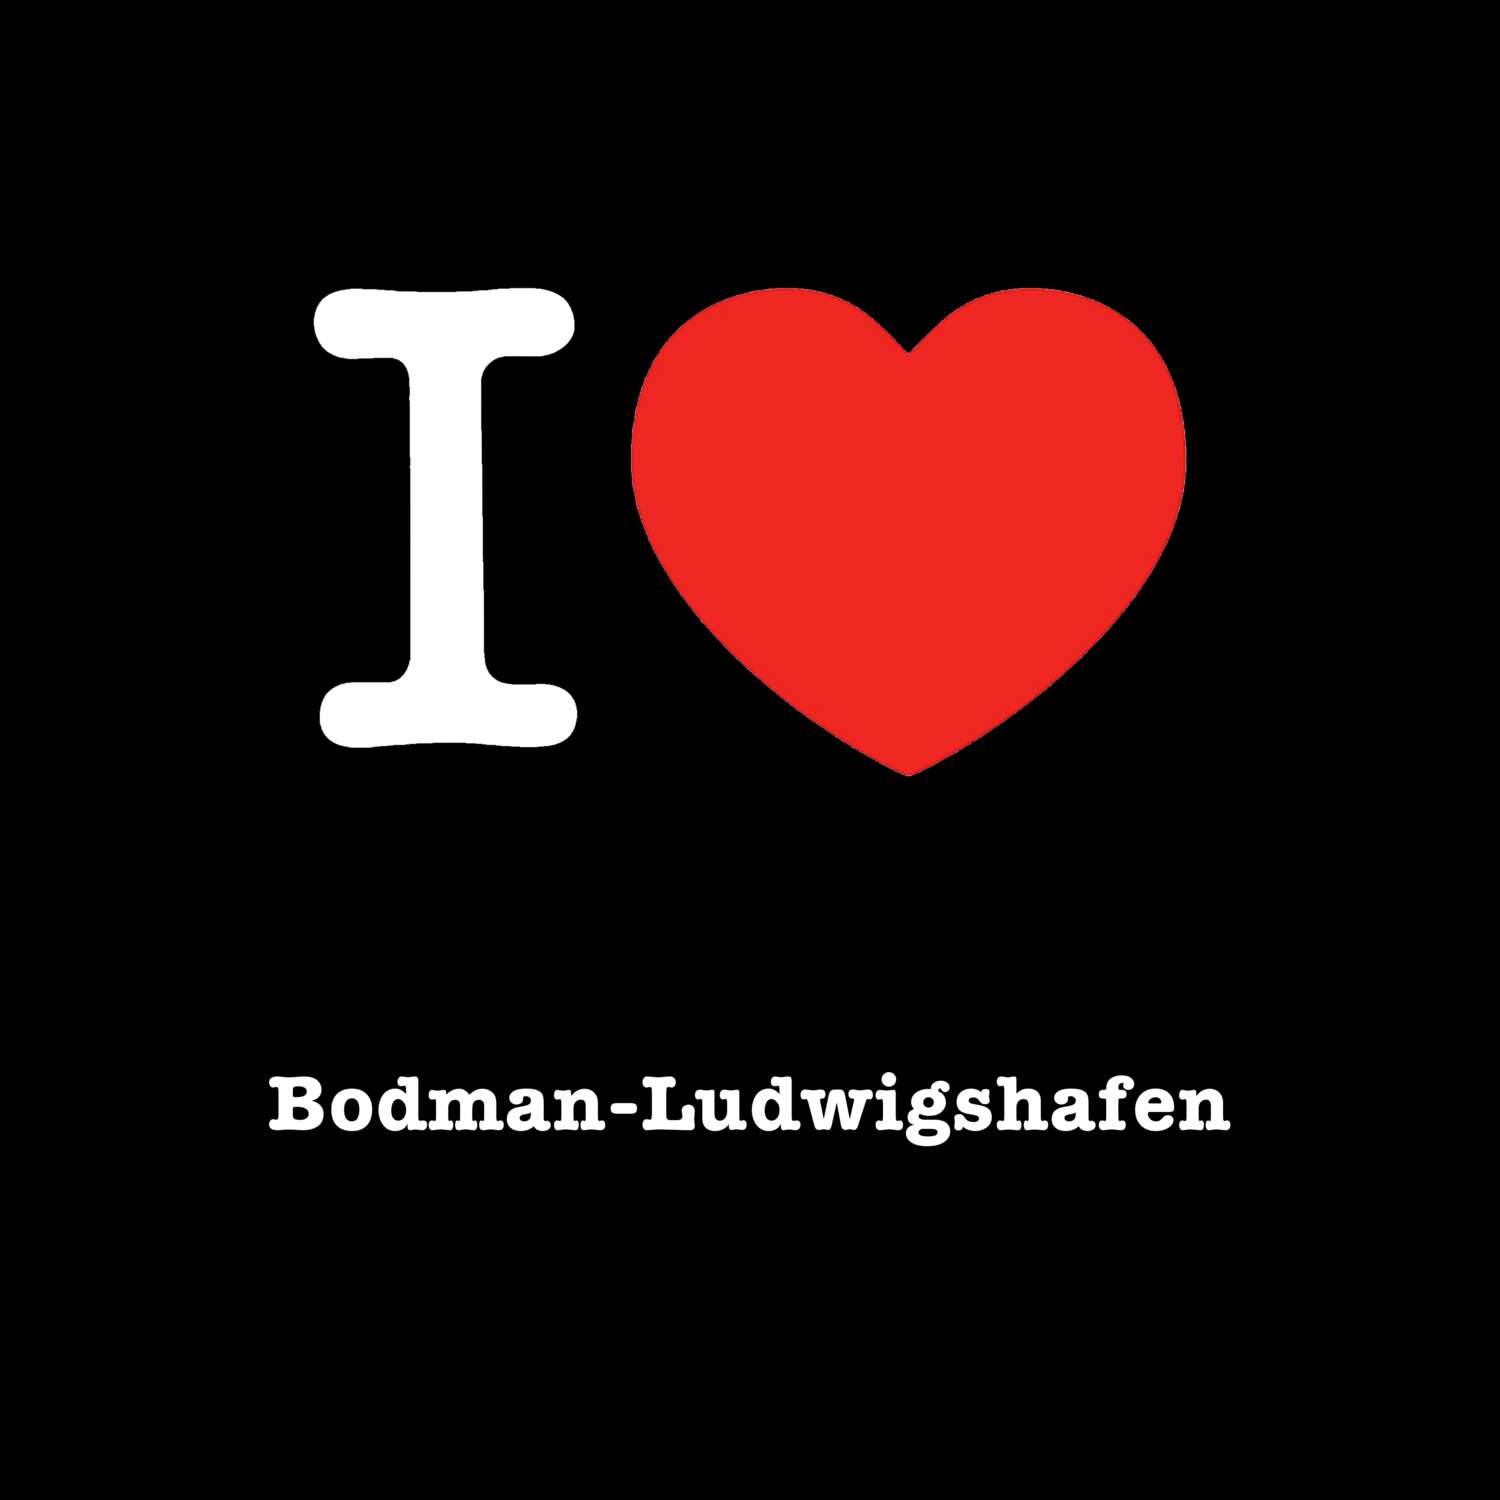 Bodman-Ludwigshafen T-Shirt »I love«